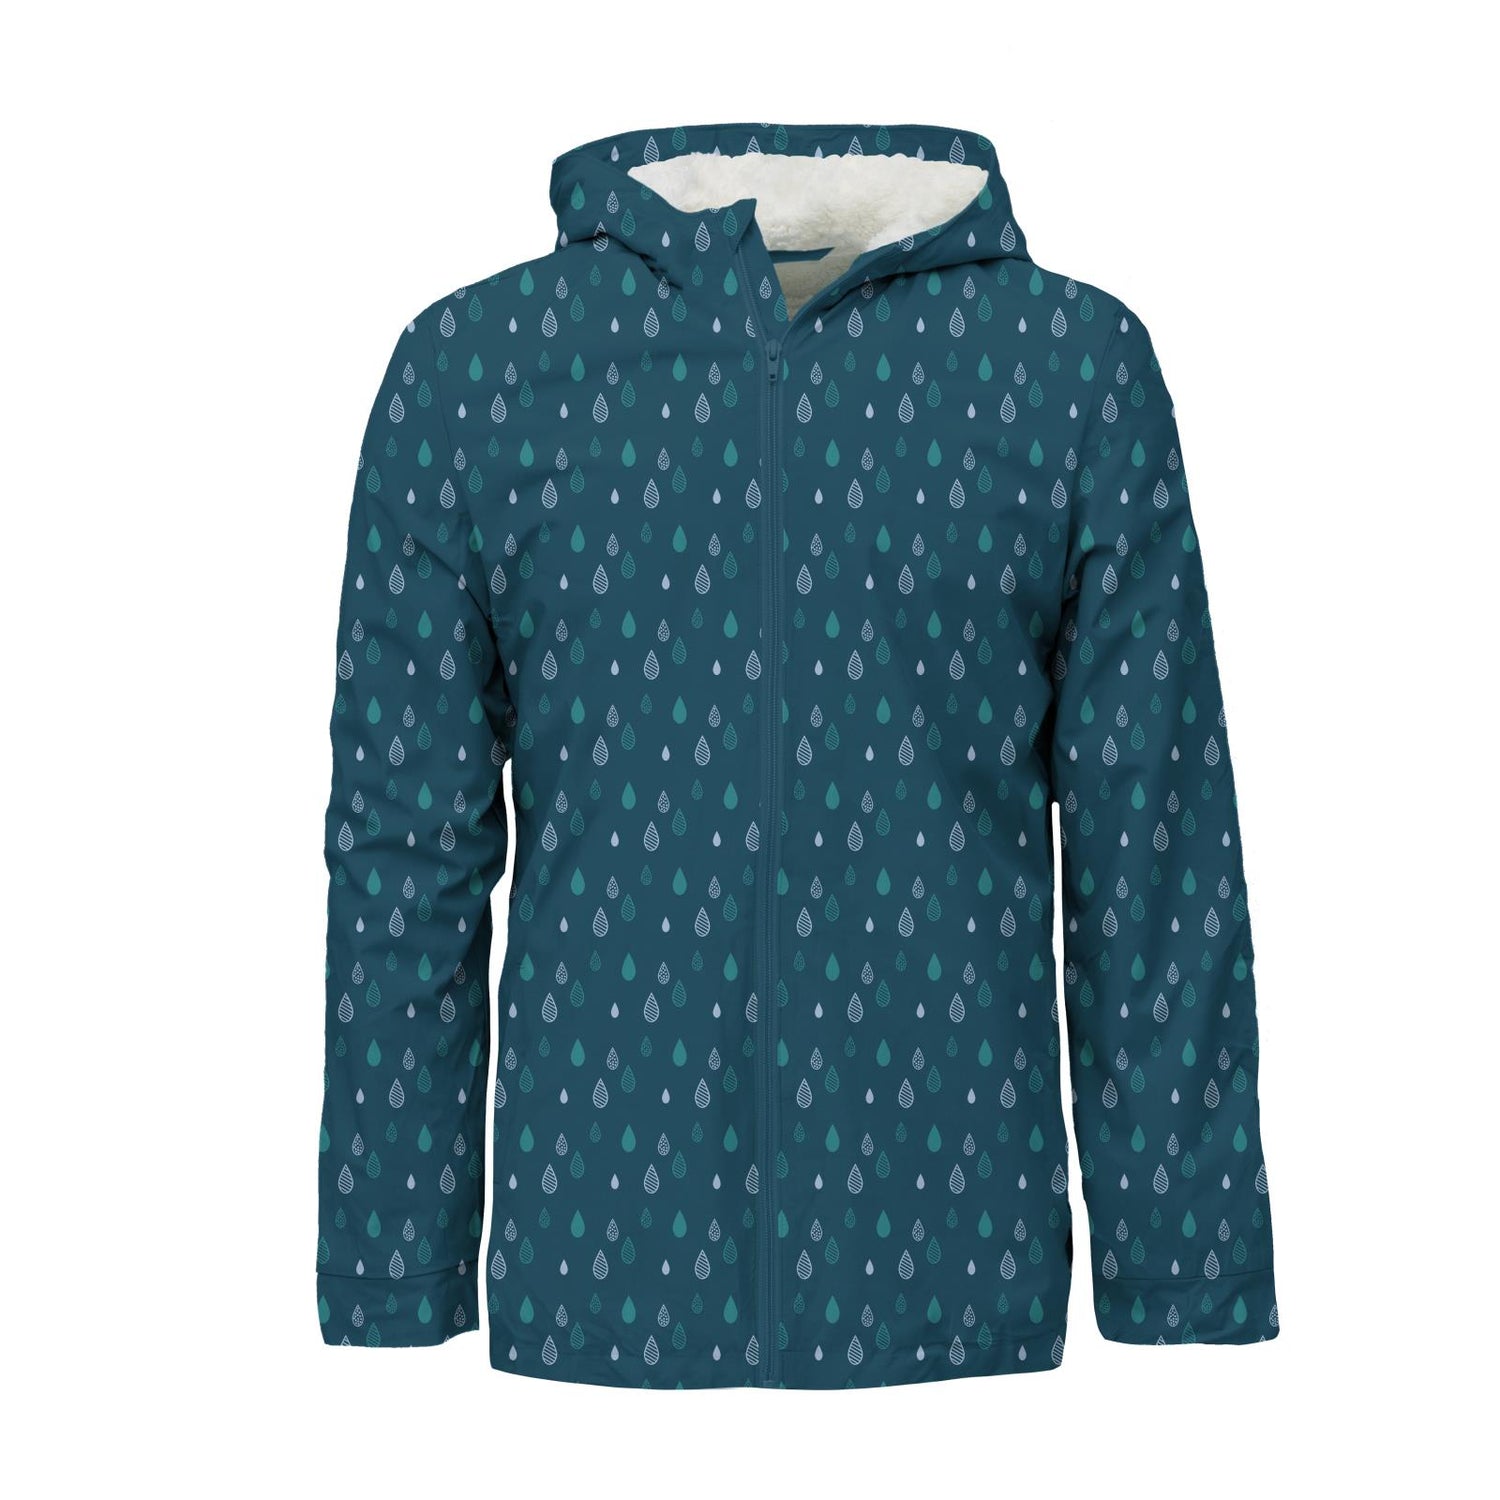 Men's Print Sherpa-Lined Hooded Rain Jacket in Peacock Raindrops